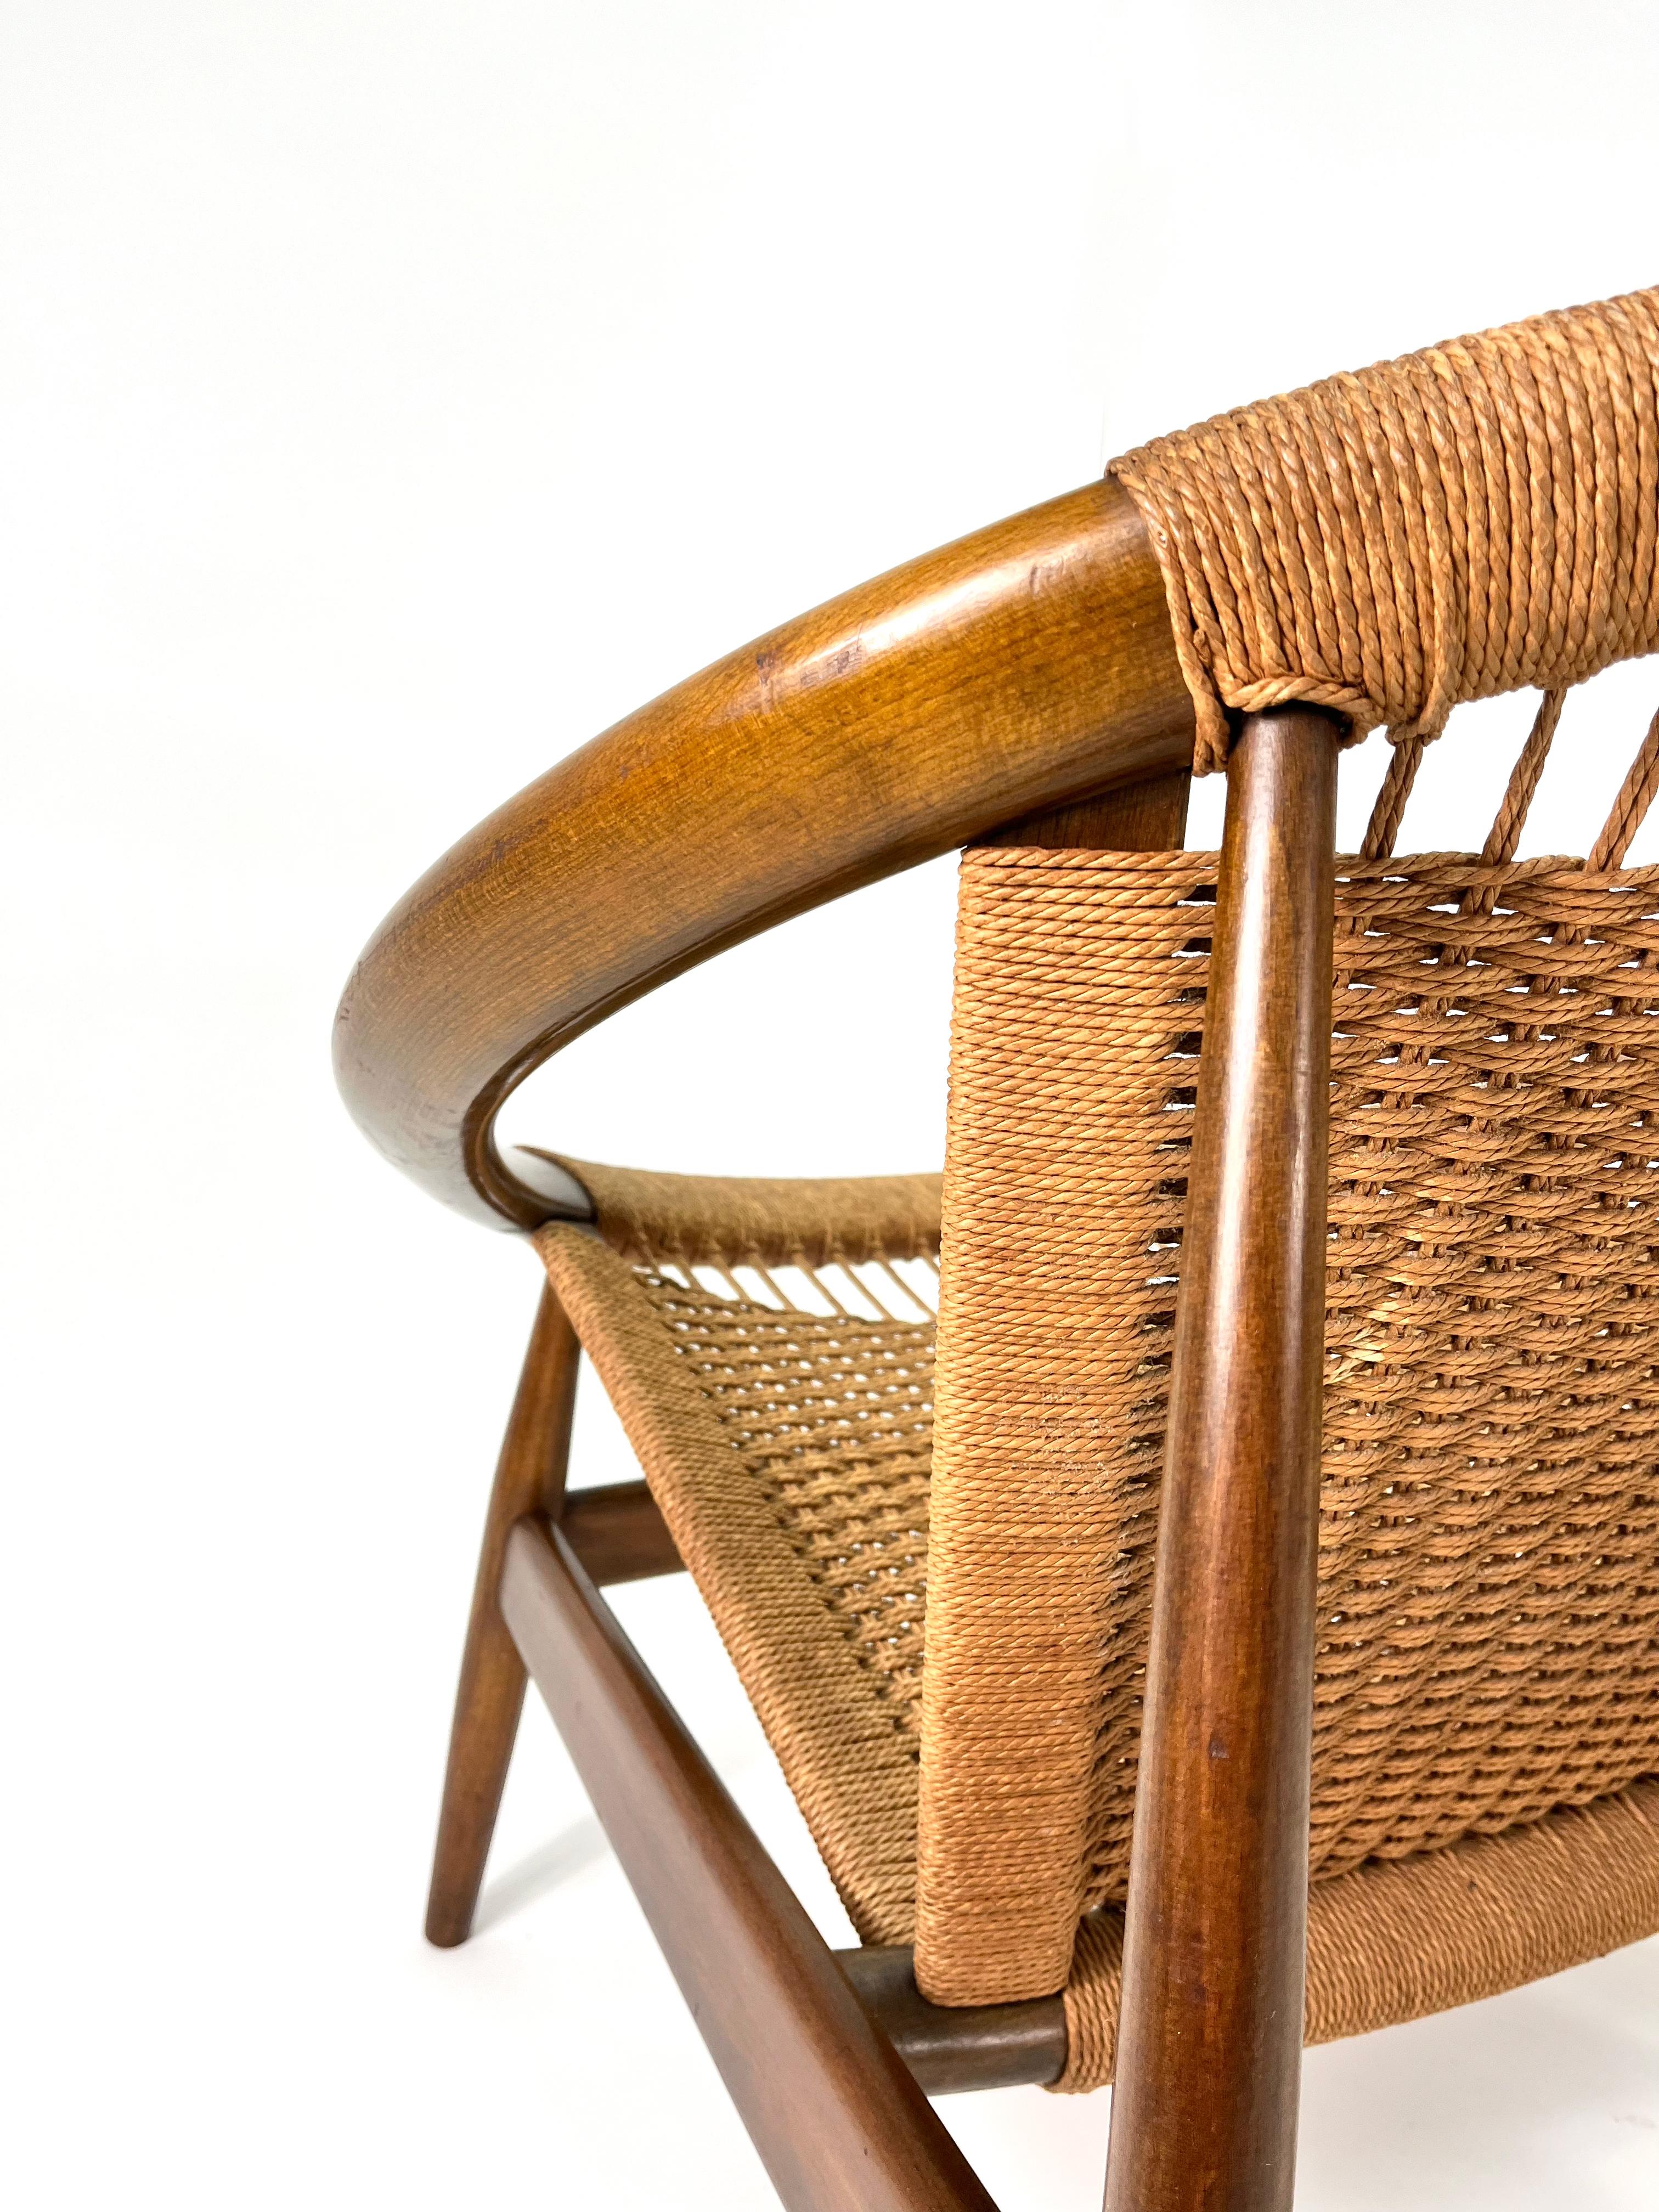 Hand-Woven Mid-Century Modern Ringstol Lounge Chair by Illum Wikkelsø For Sale